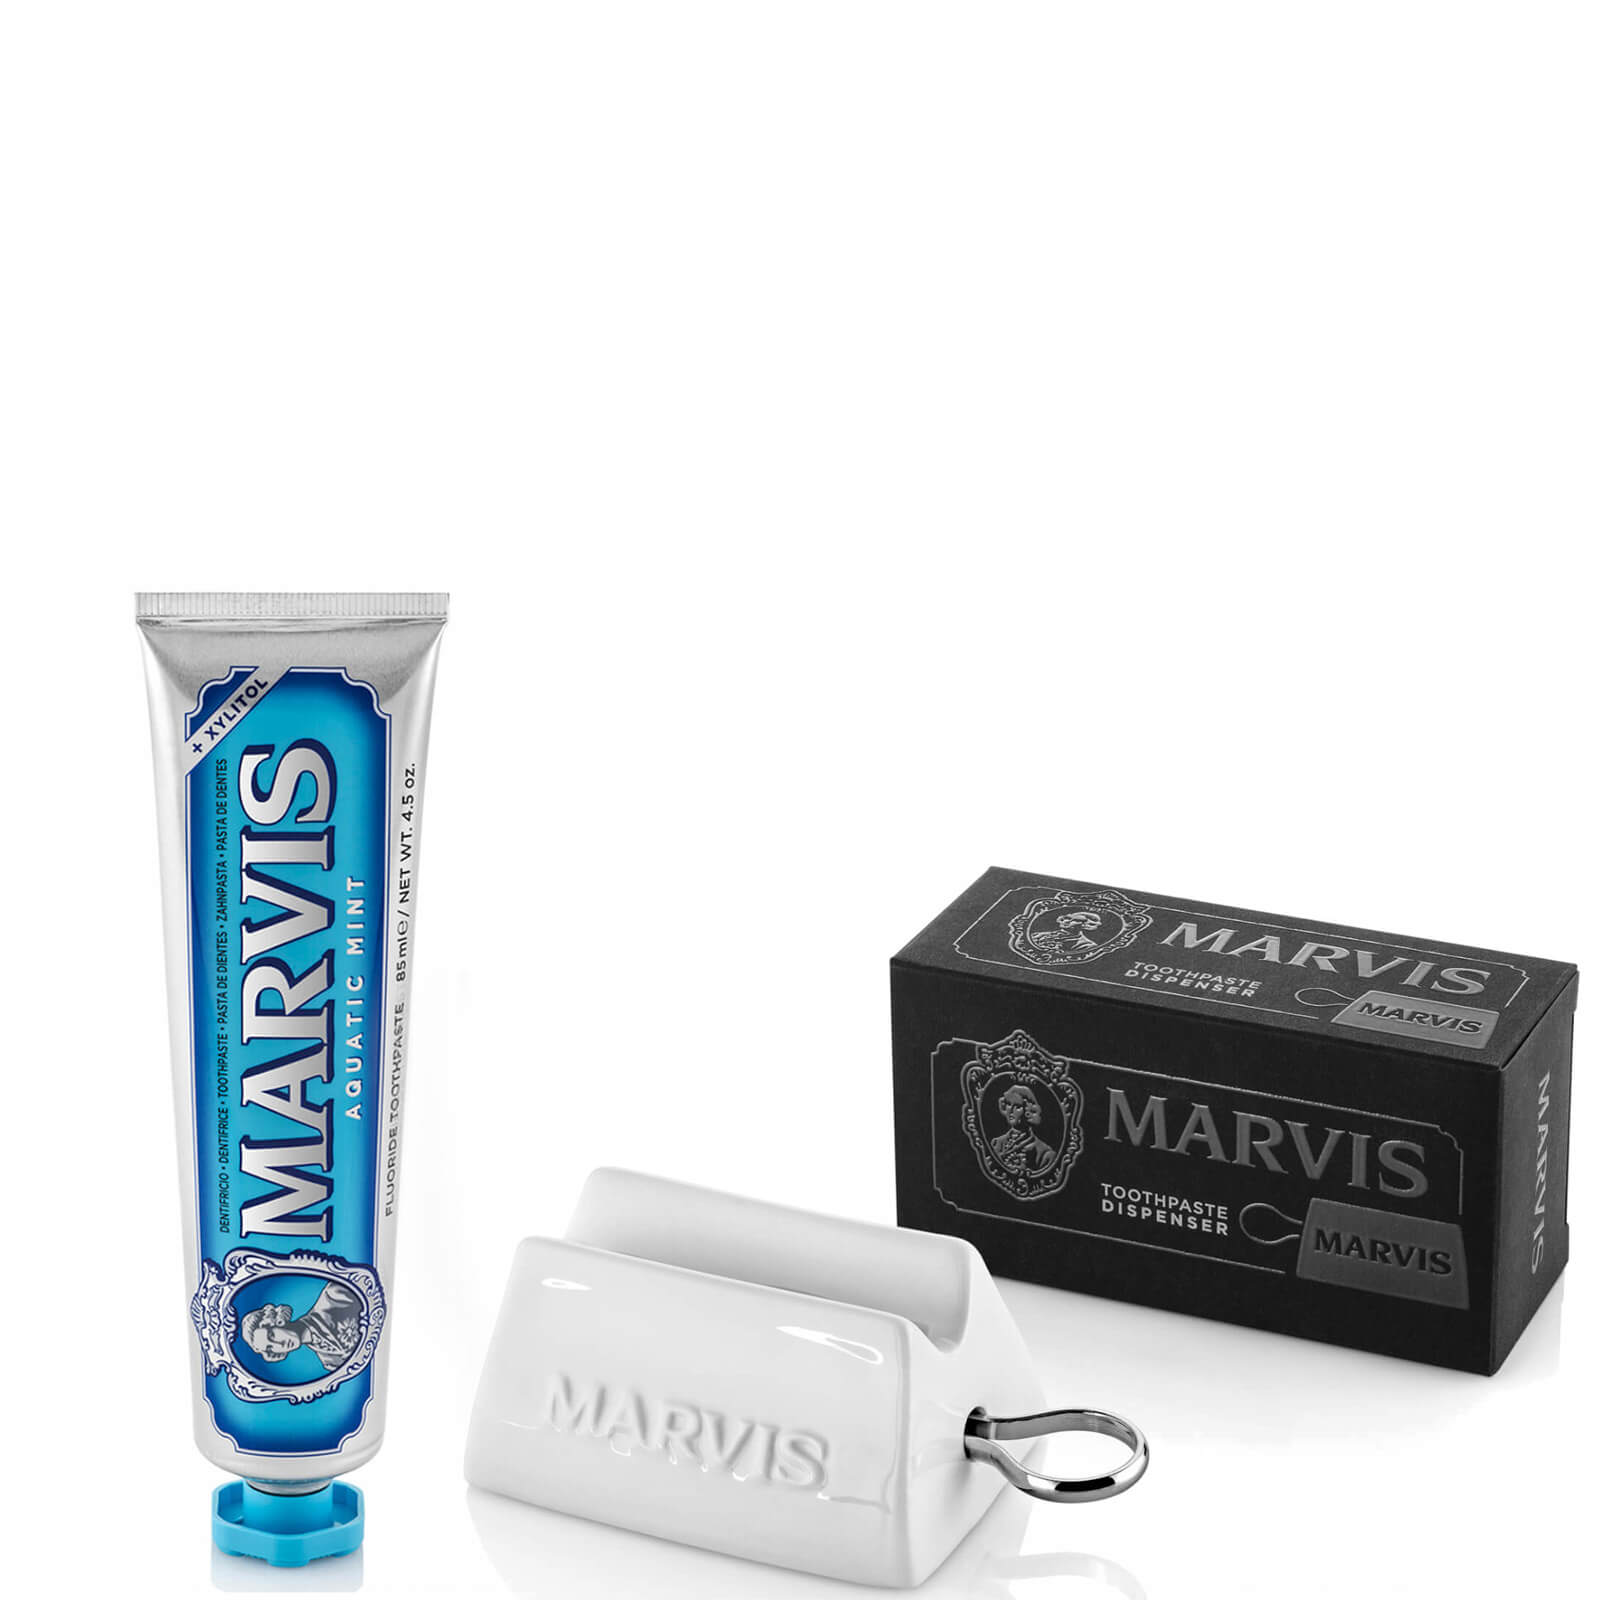 Marvis Aquatic Mint Toothpaste and Squeezer Bundle lookfantastic.com imagine